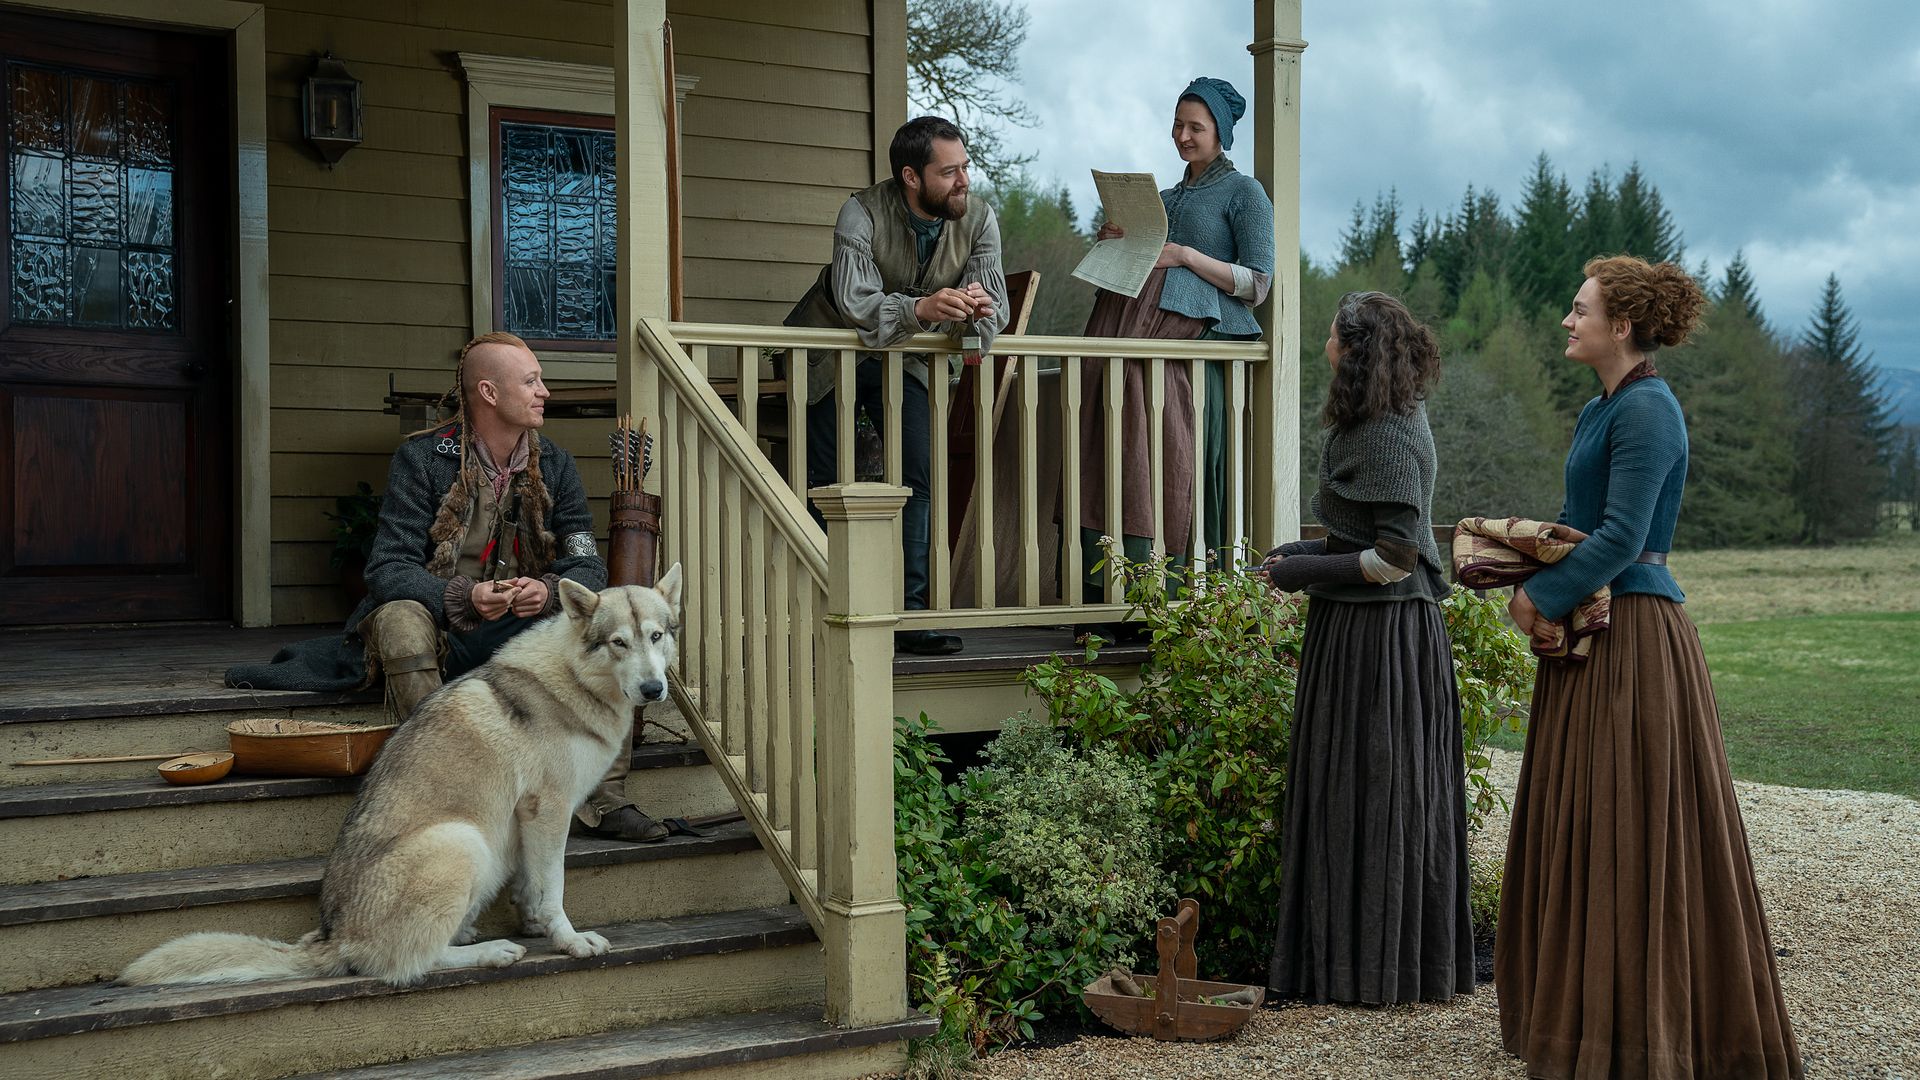 The seventh season of Outlander premieres on June 16 